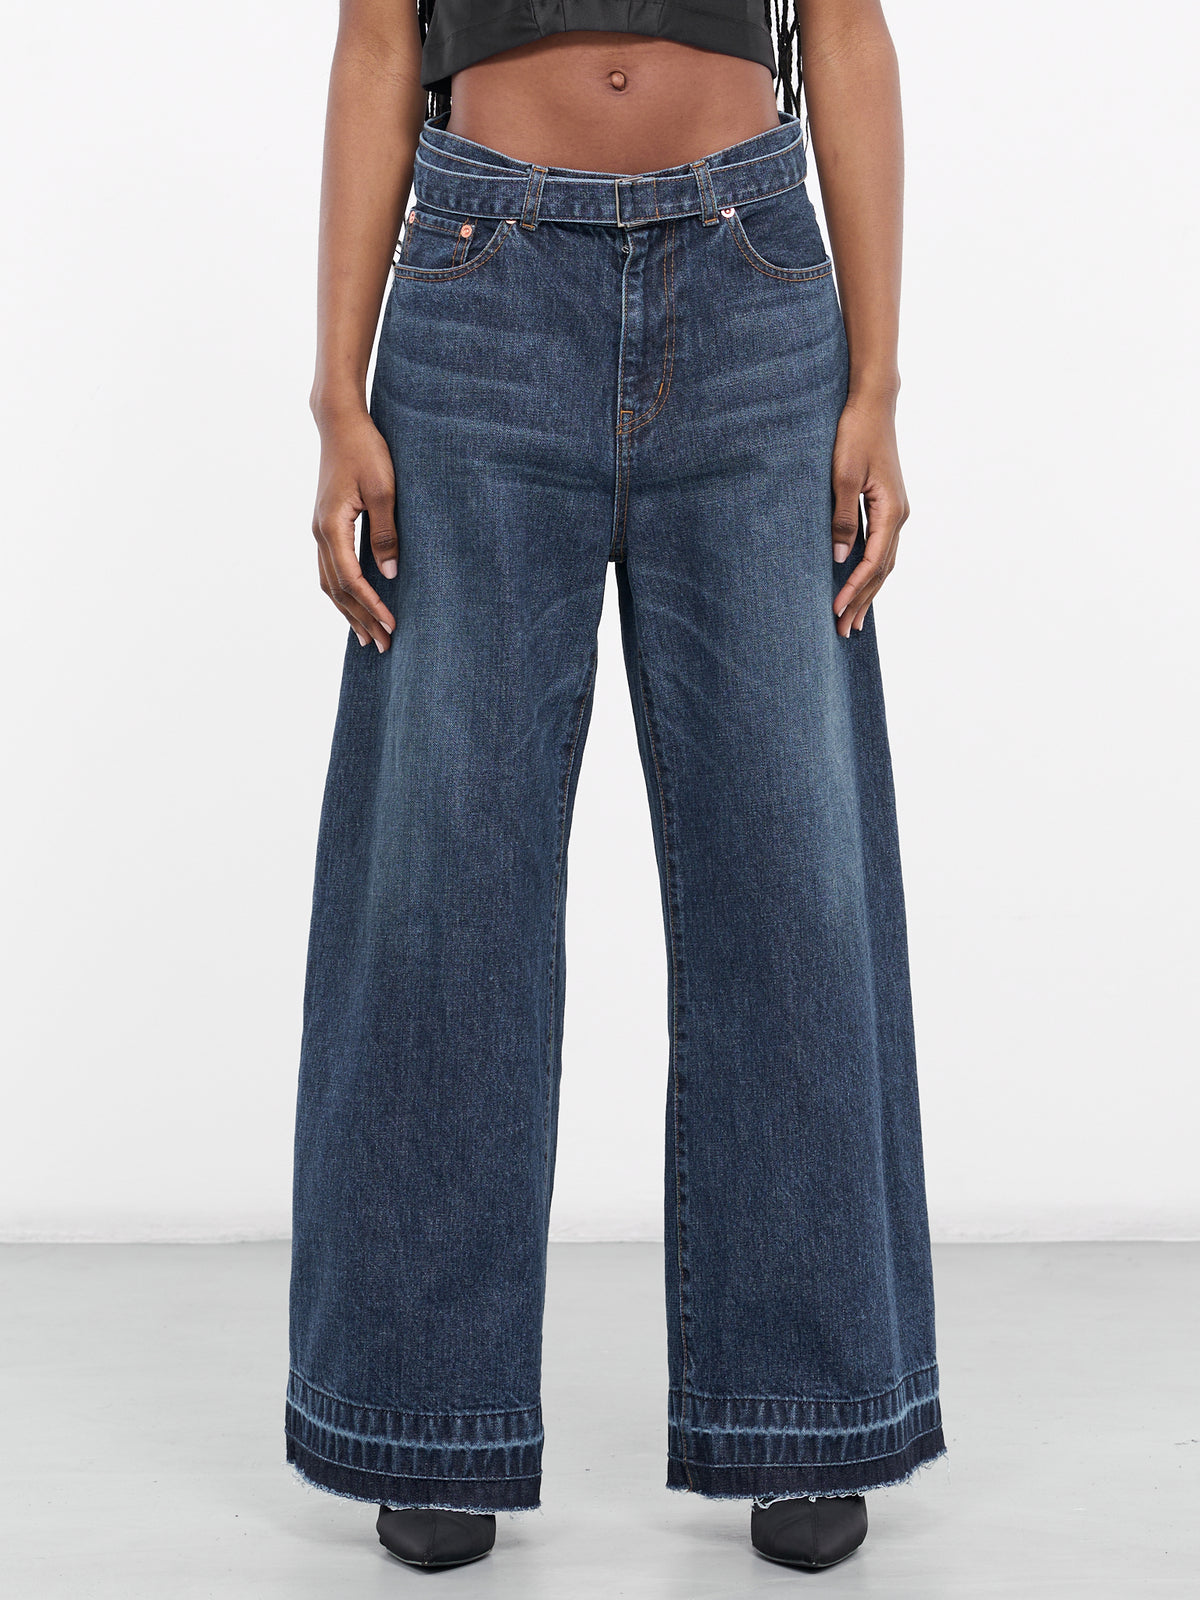 Belted Jeans (24-07140-401-BLUE)